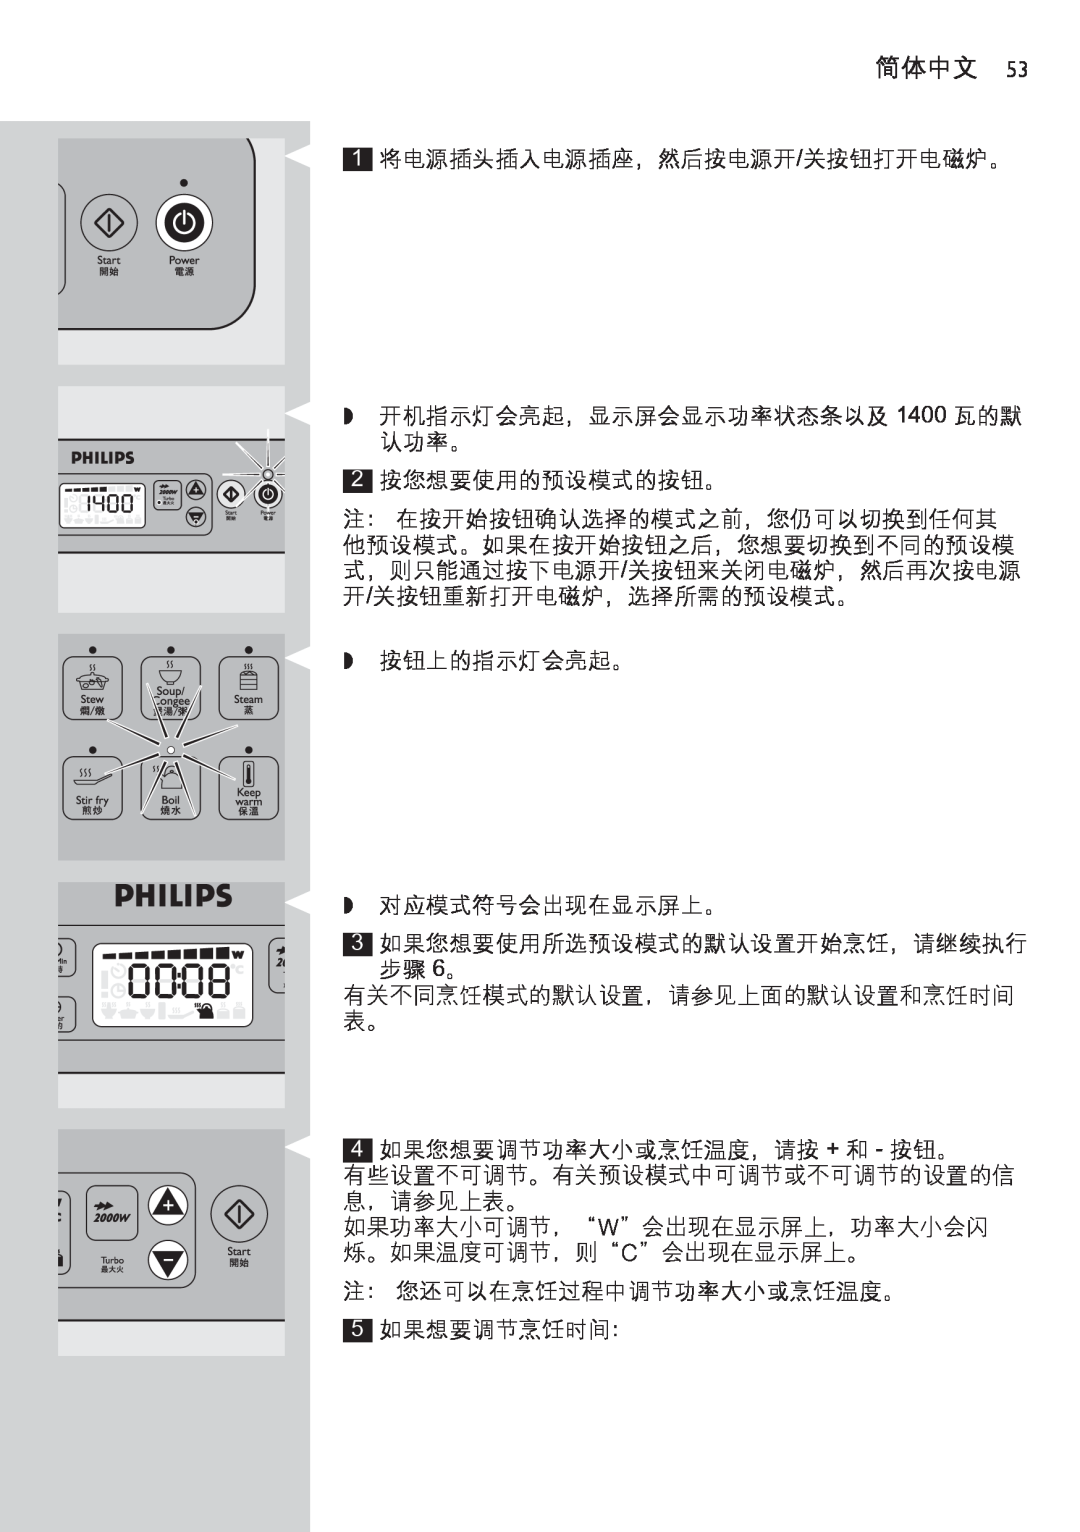 Philips HD4918 manual 简体中文, 1 将电源插头插入电源插座，然后按电源开/关按钮打开电磁炉。 开机指示灯会亮起，显示屏会显示功率状态条以及 1400 瓦的默 认功率。 